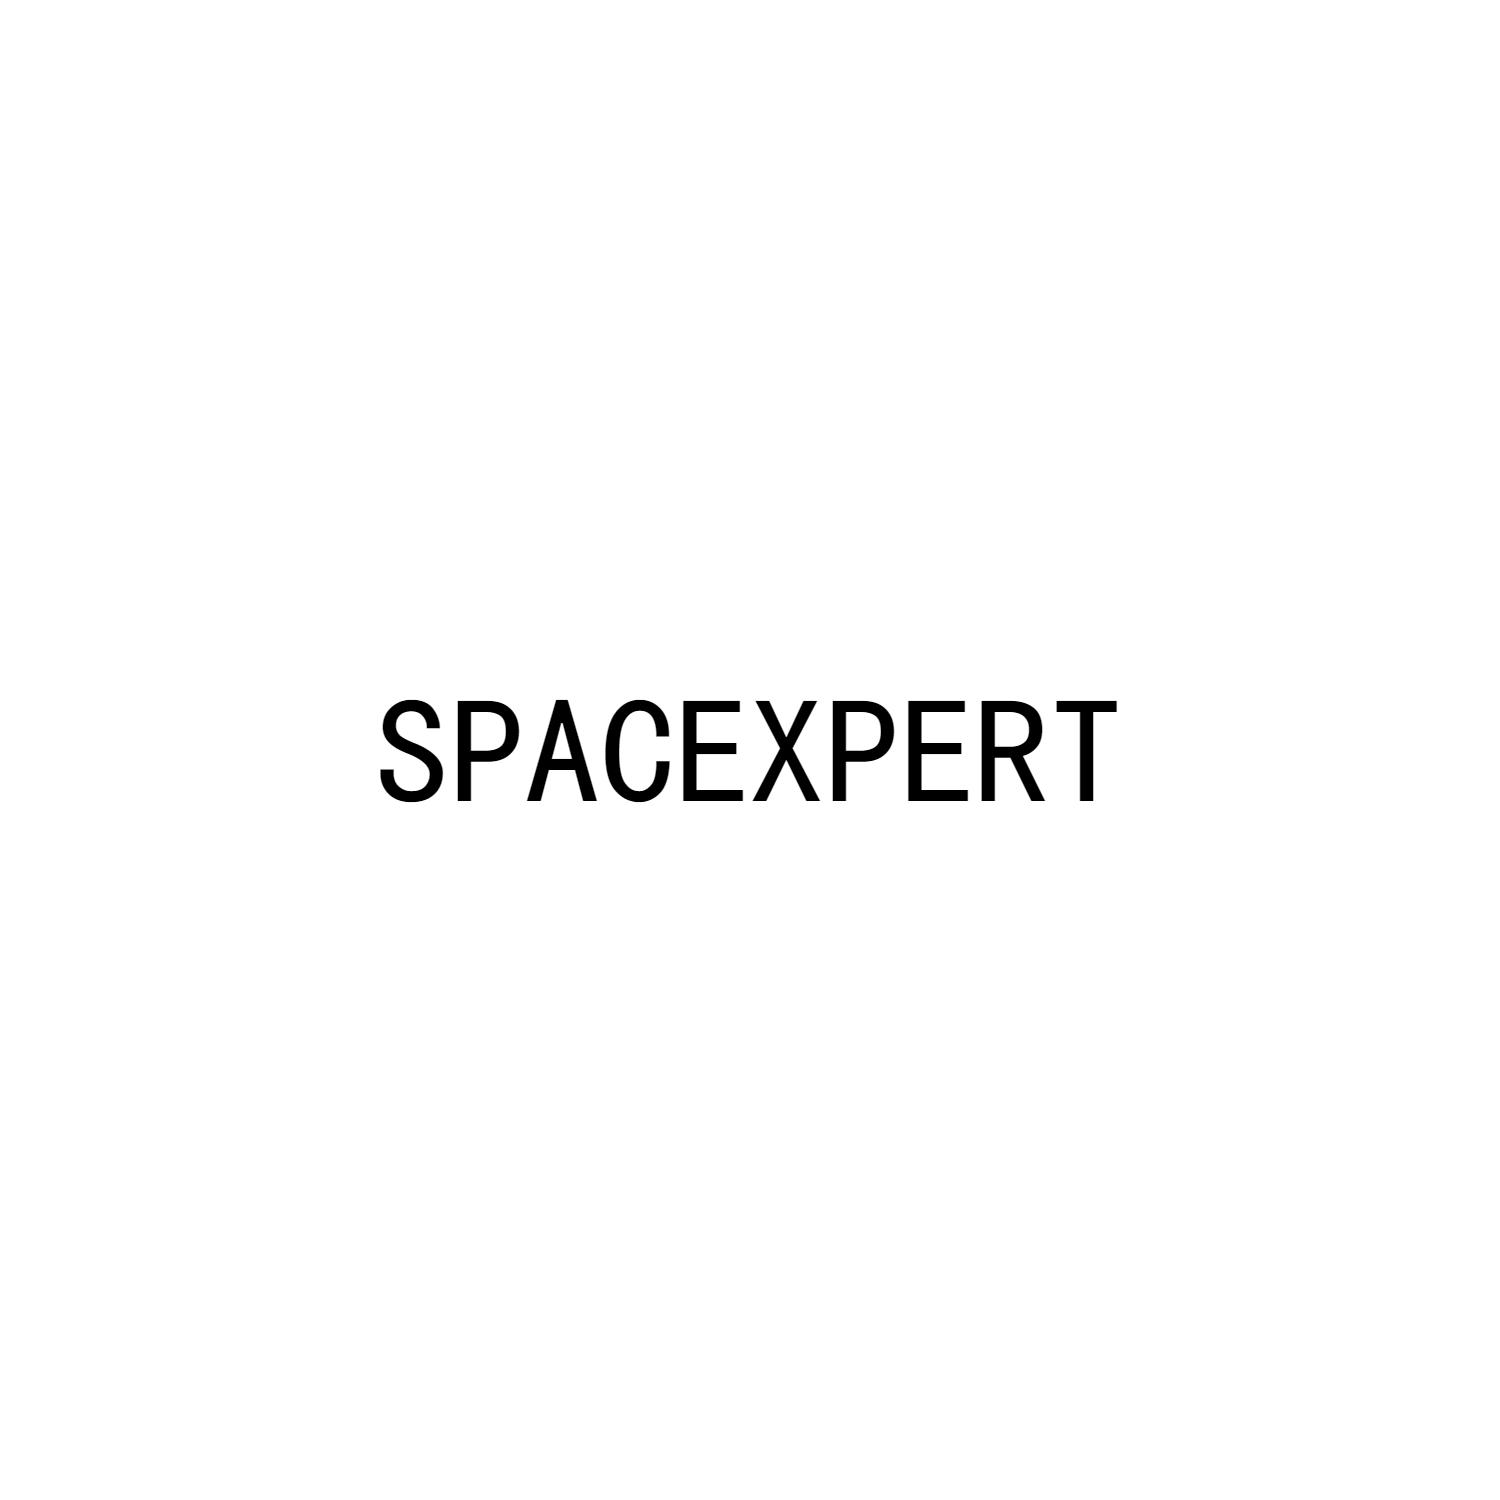 SPACEXPERT